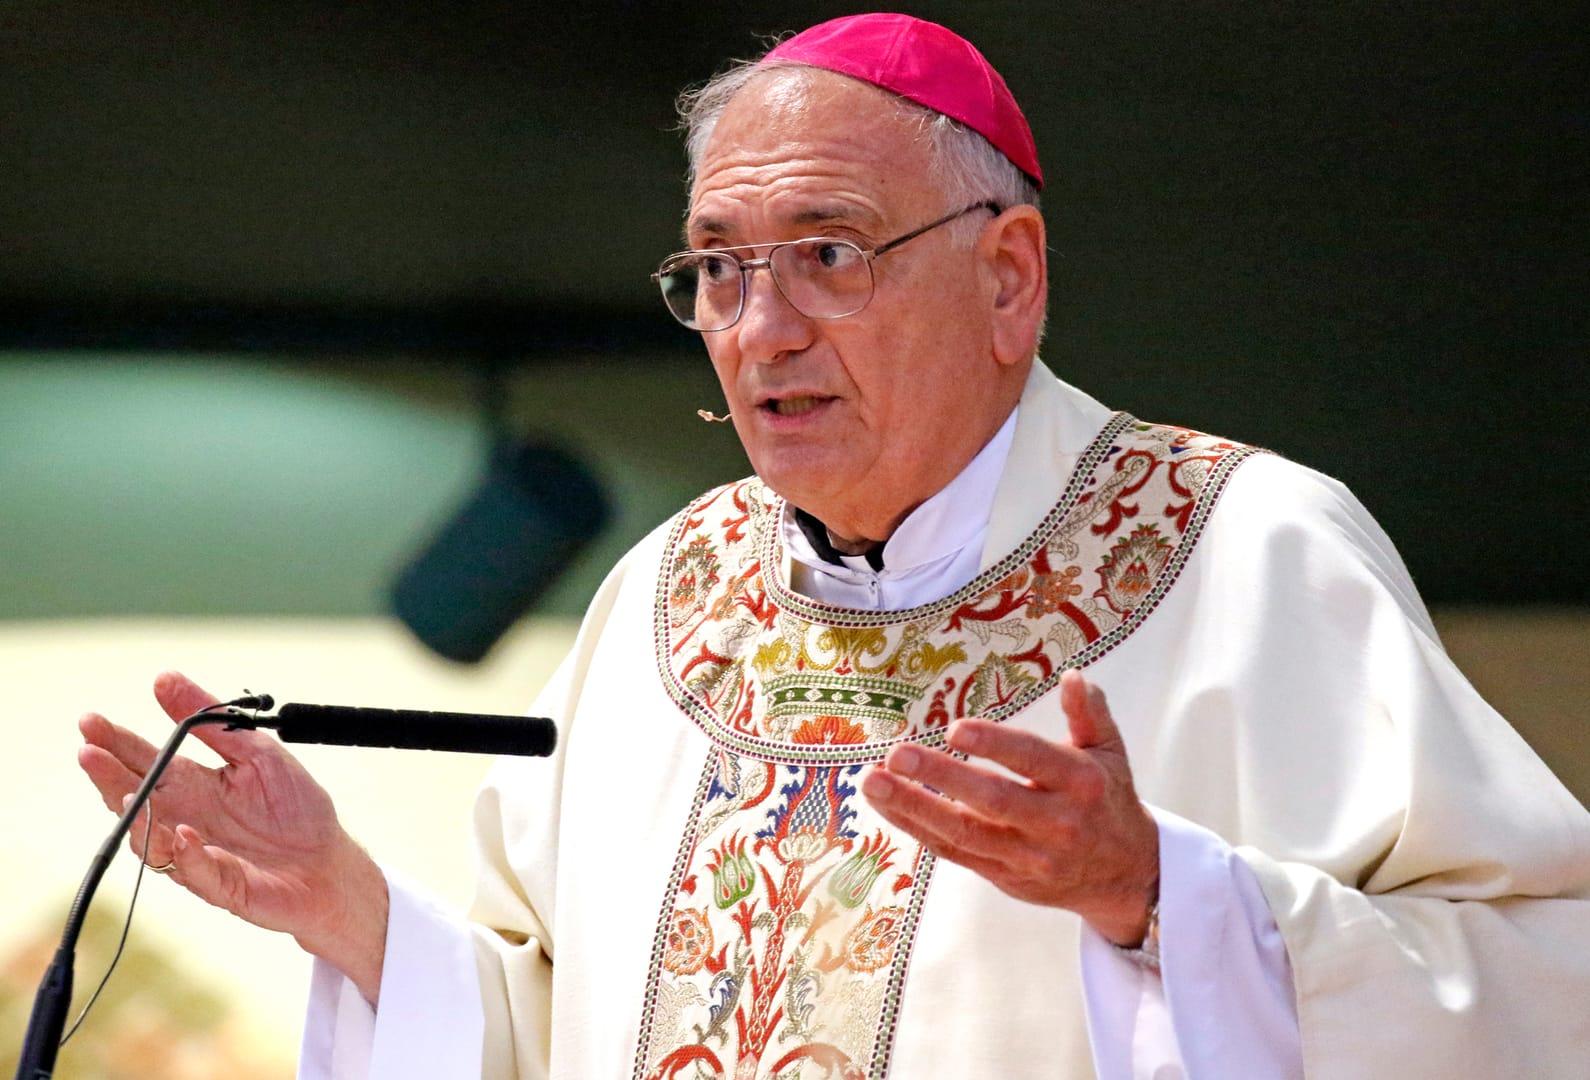 Brooklyn bishop vigorously denies abuse allegation